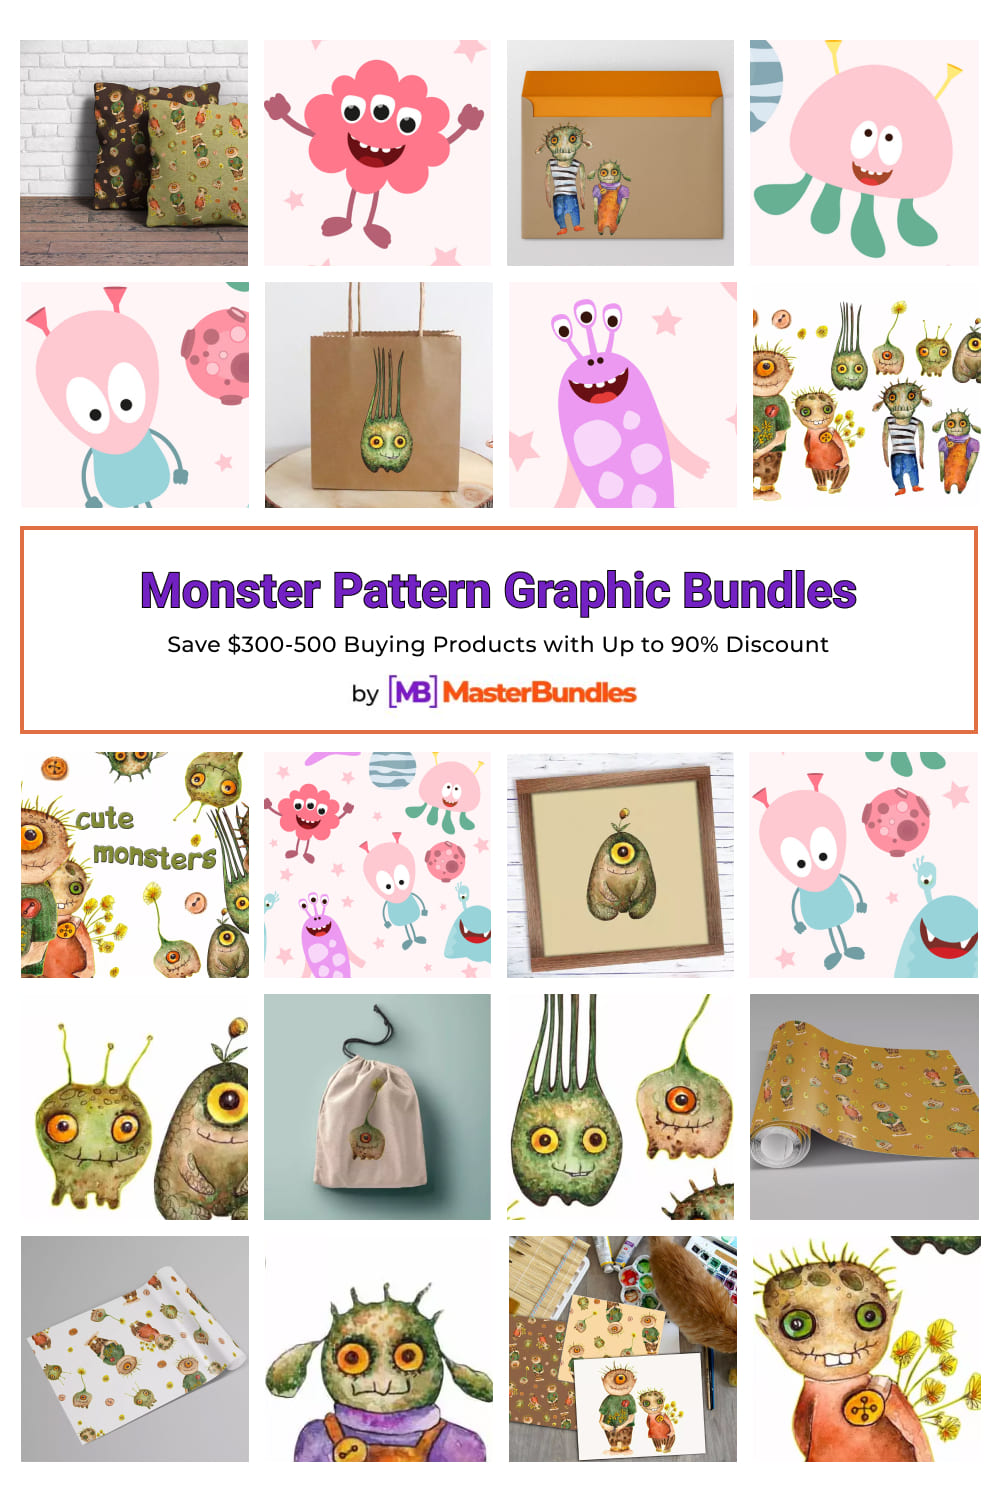 Monster Pattern Graphic Bundles for Pinterest.